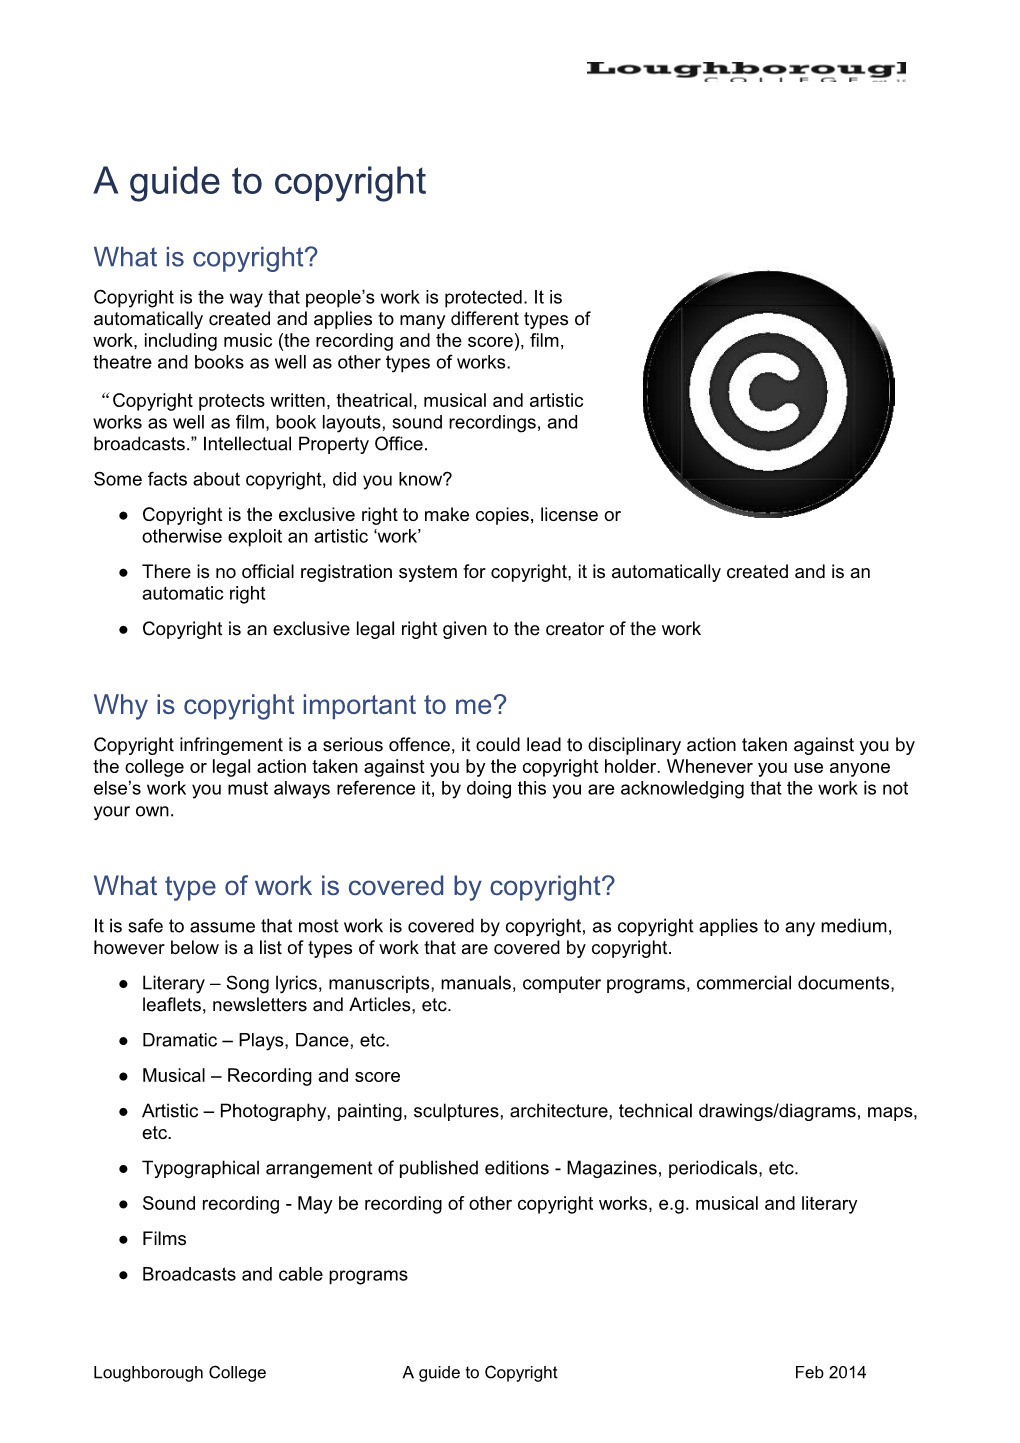 Copyright Resource Content (Student Facing)